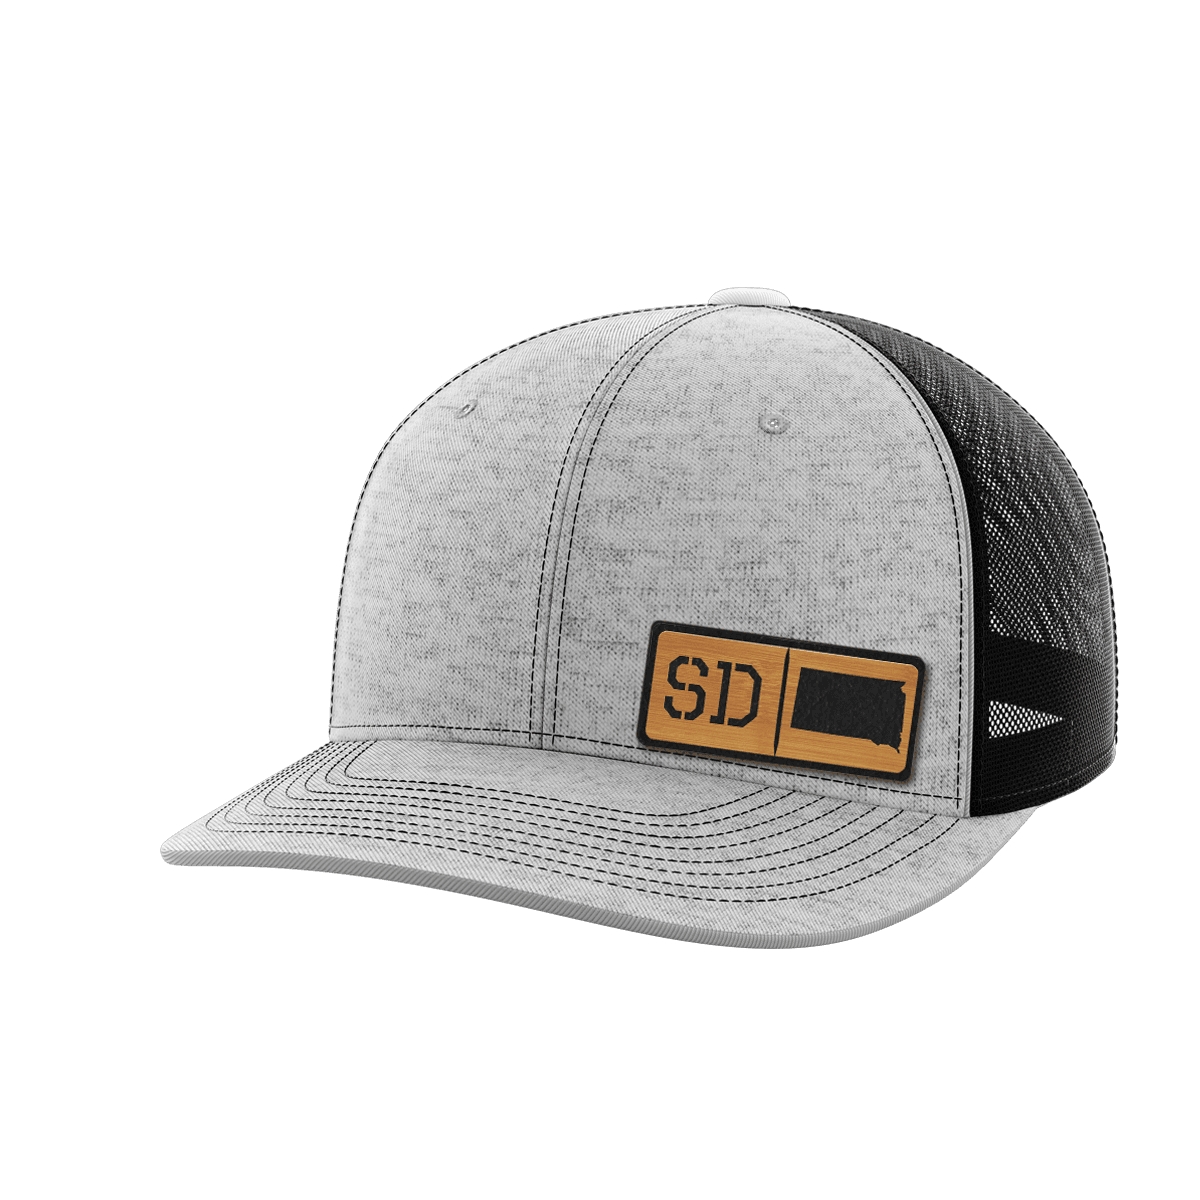 Thumbnail for South Dakota Homegrown Hats - Greater Half